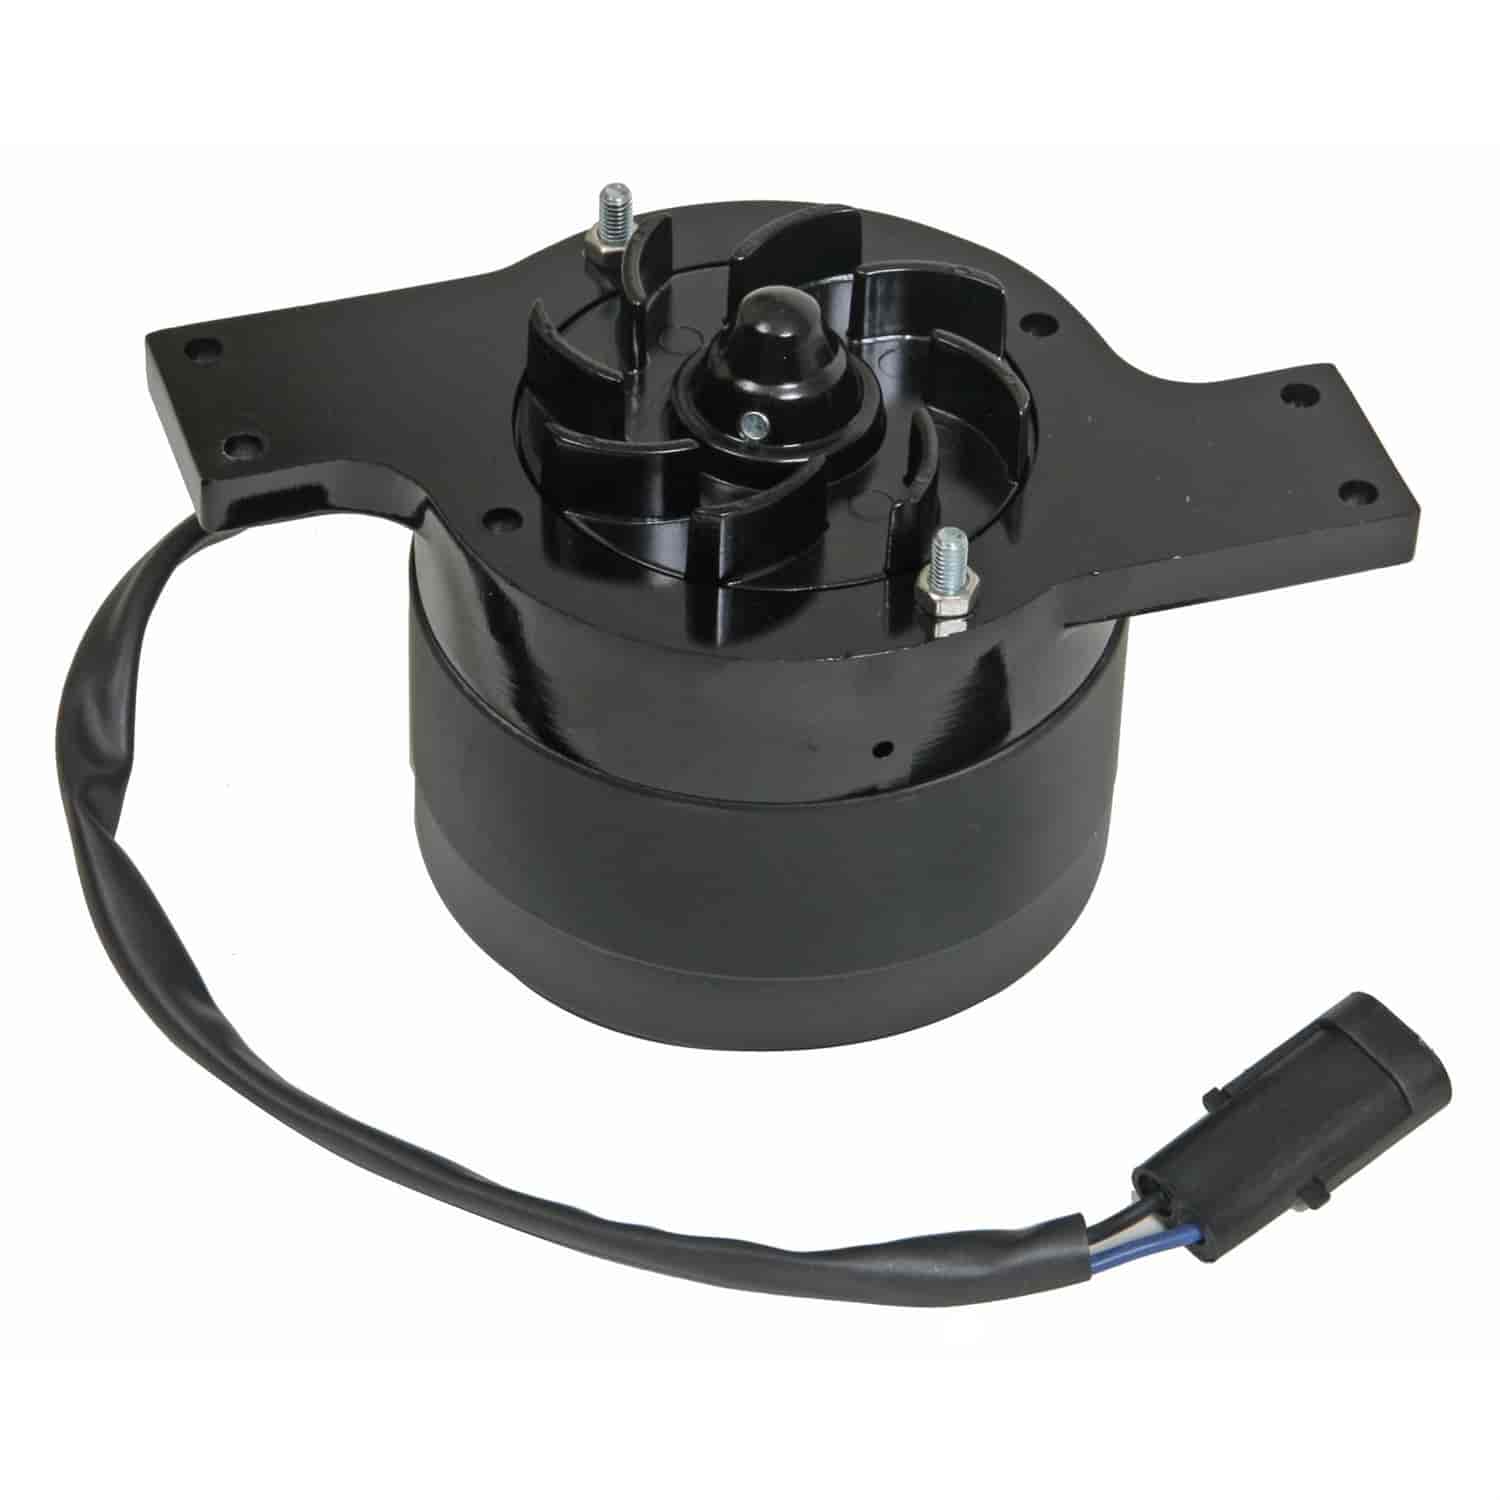 Electric Water Pump Replacement Motor - Black